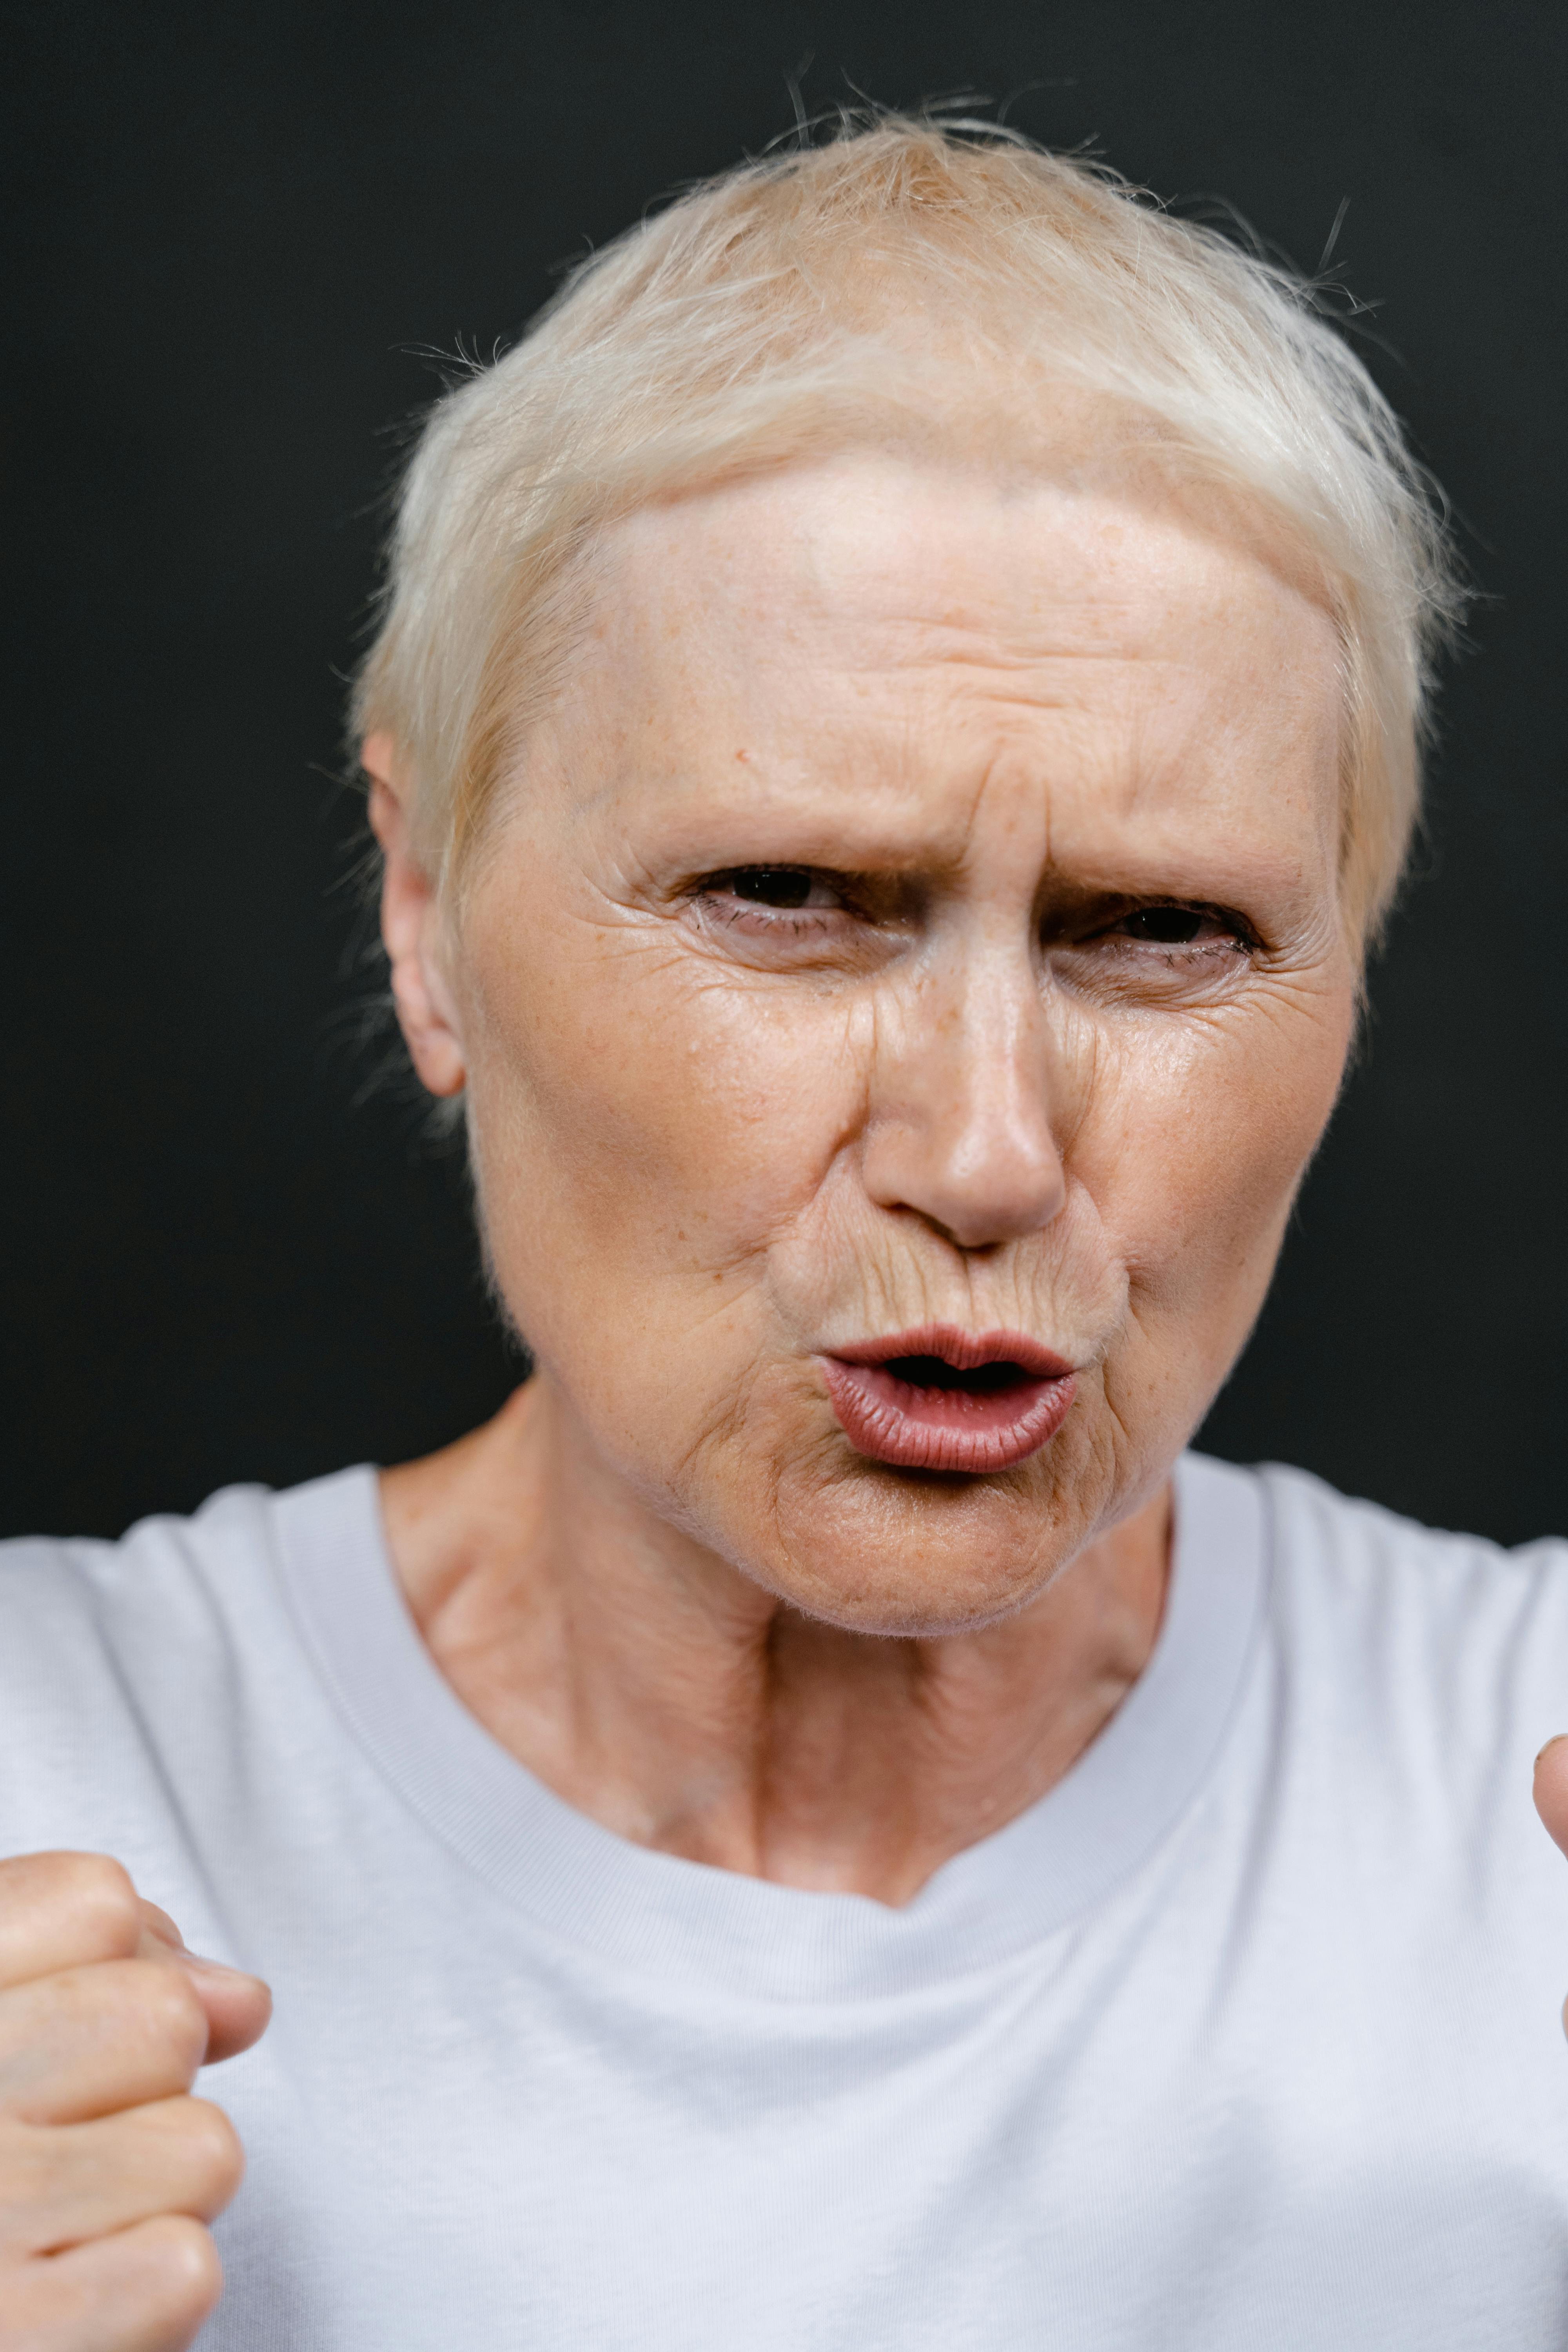 Elderly woman angrily responding | Source: Pexels